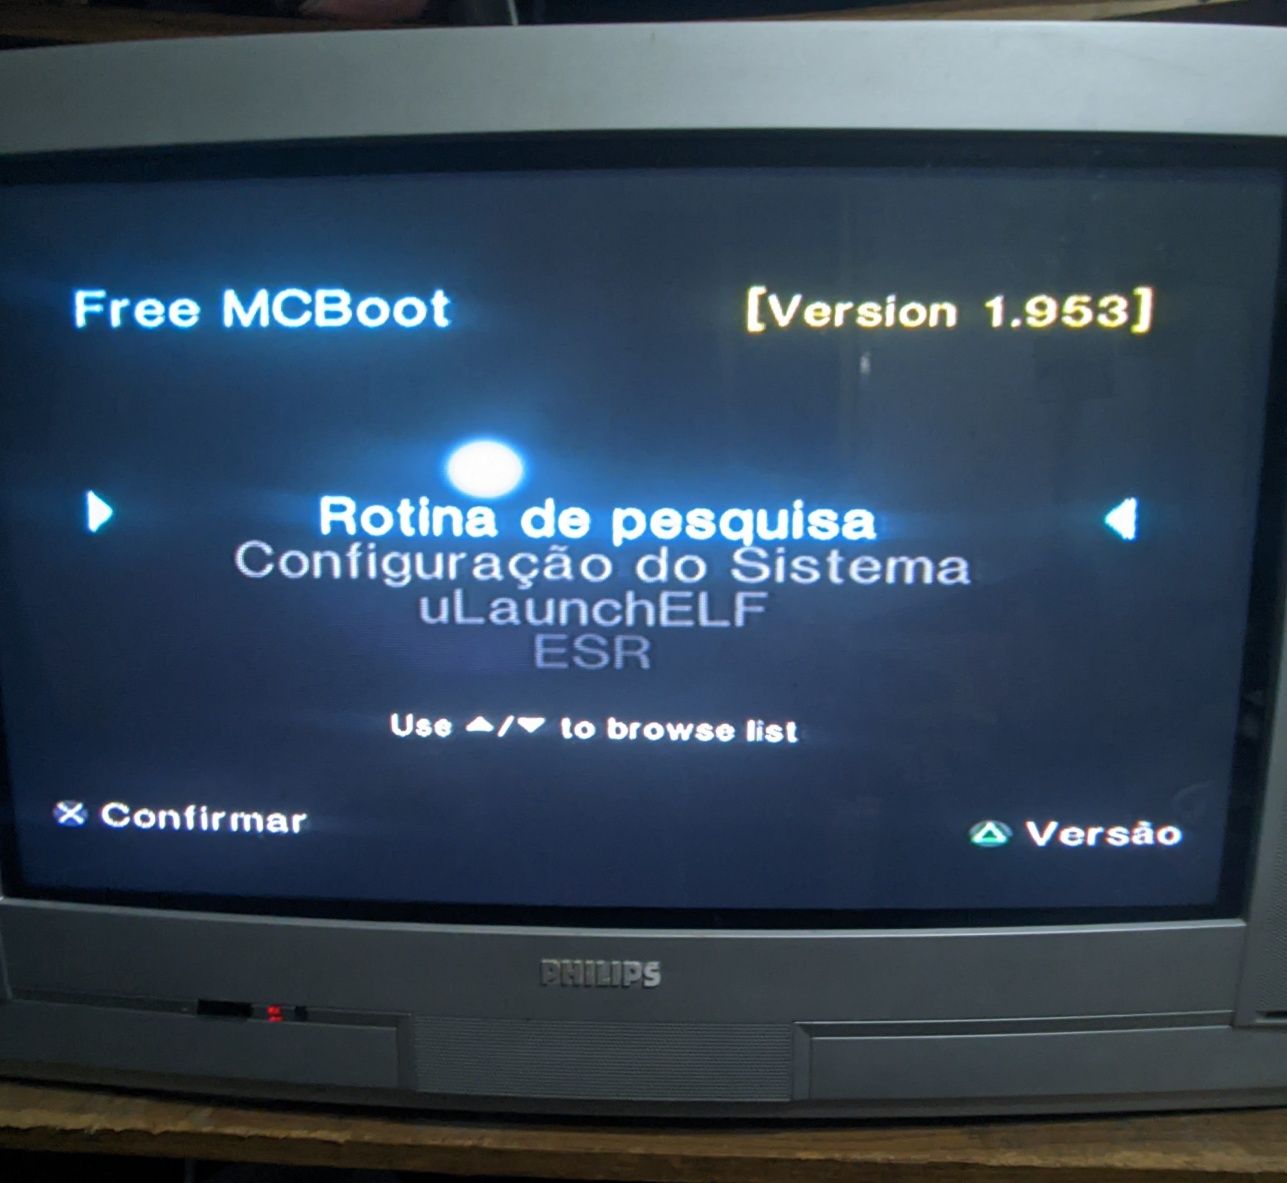 PS2 fat FreeMcboot com HDD 160 gb